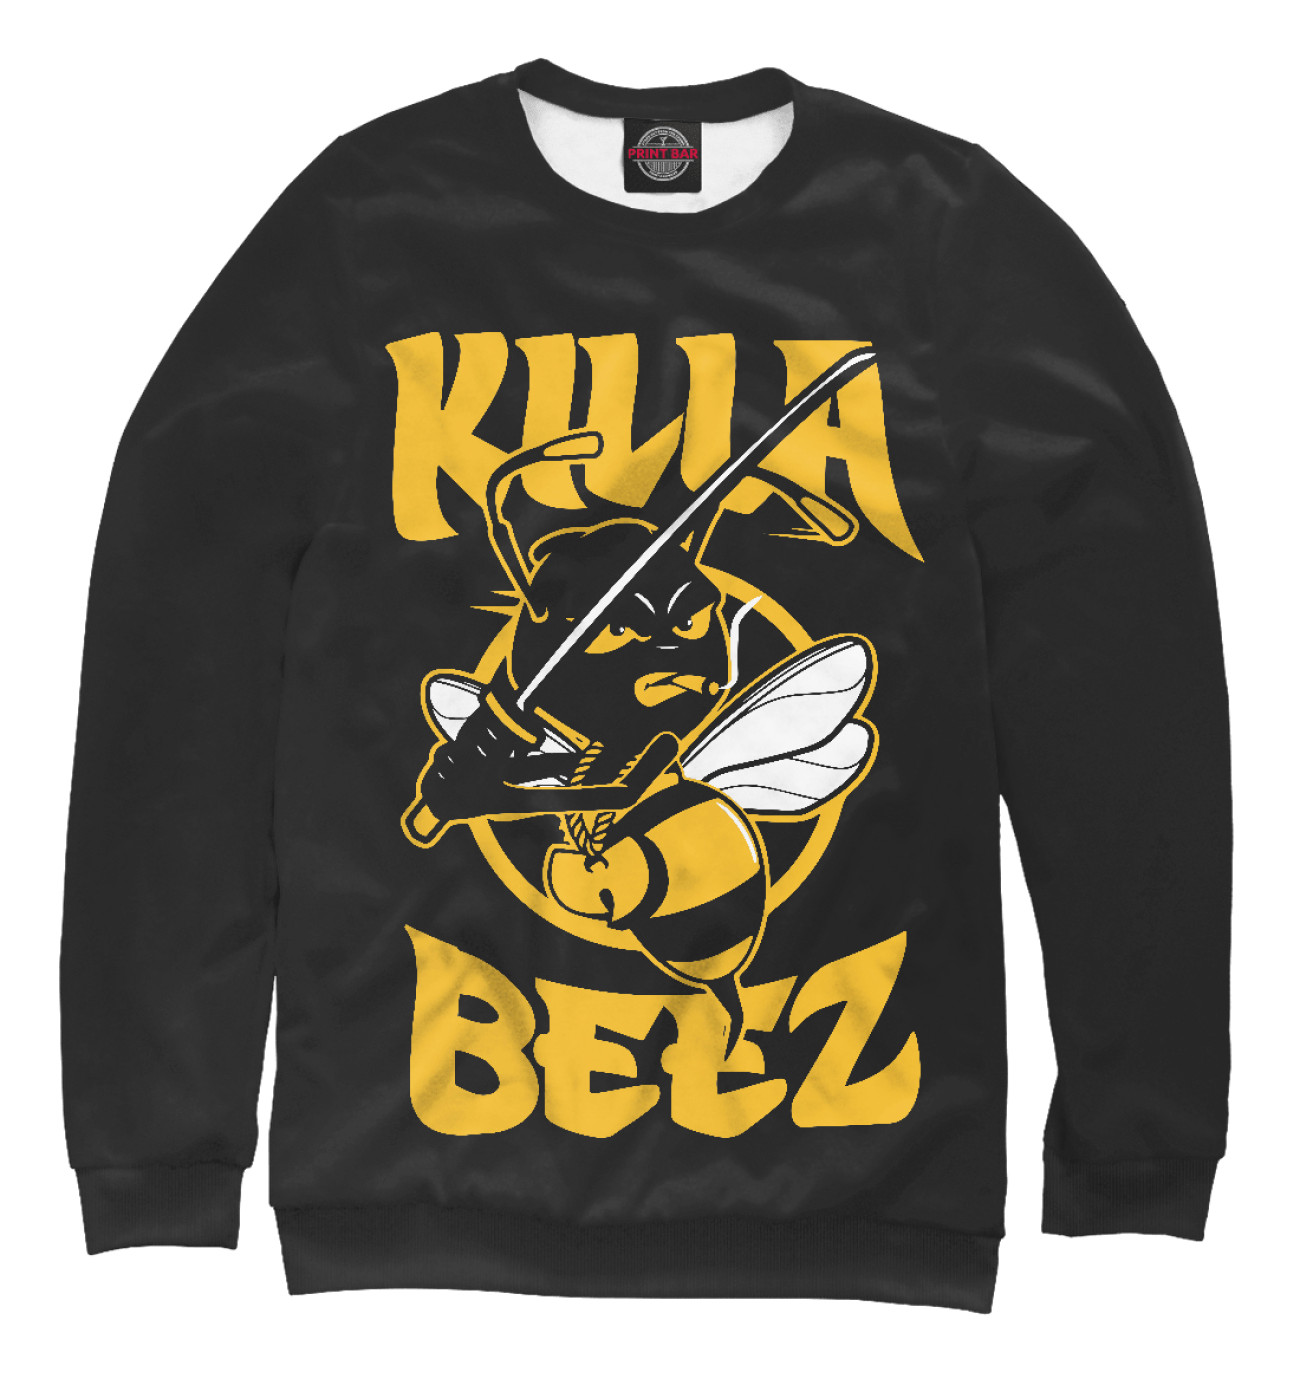 Женский Свитшот Wu-Tang Killa Beez, артикул: WTK-861126-swi-1